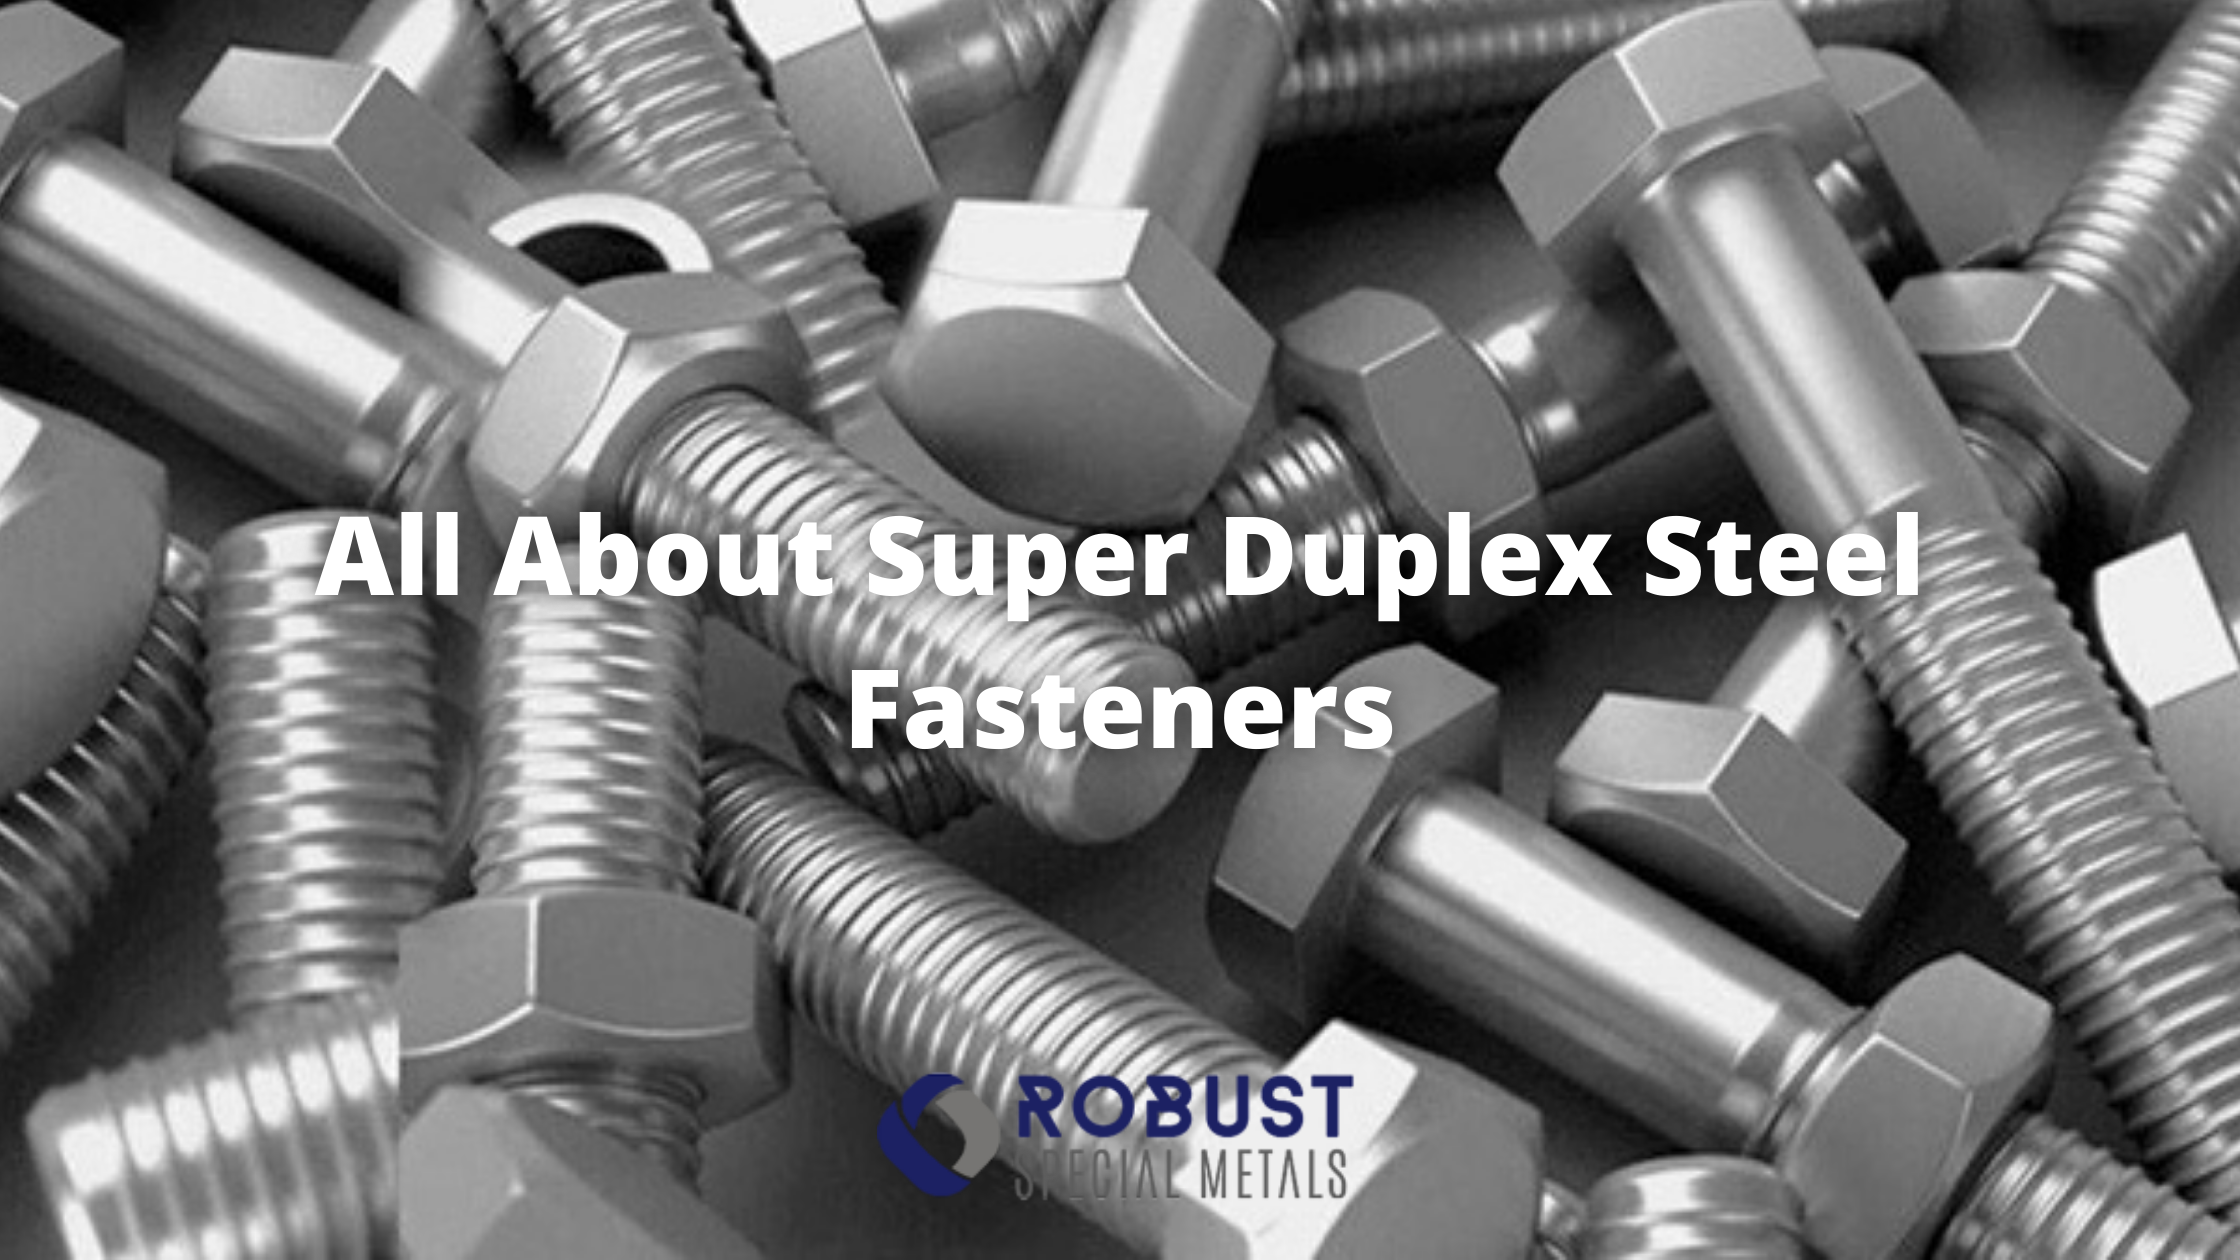 Super Duplex Steel Fasteners